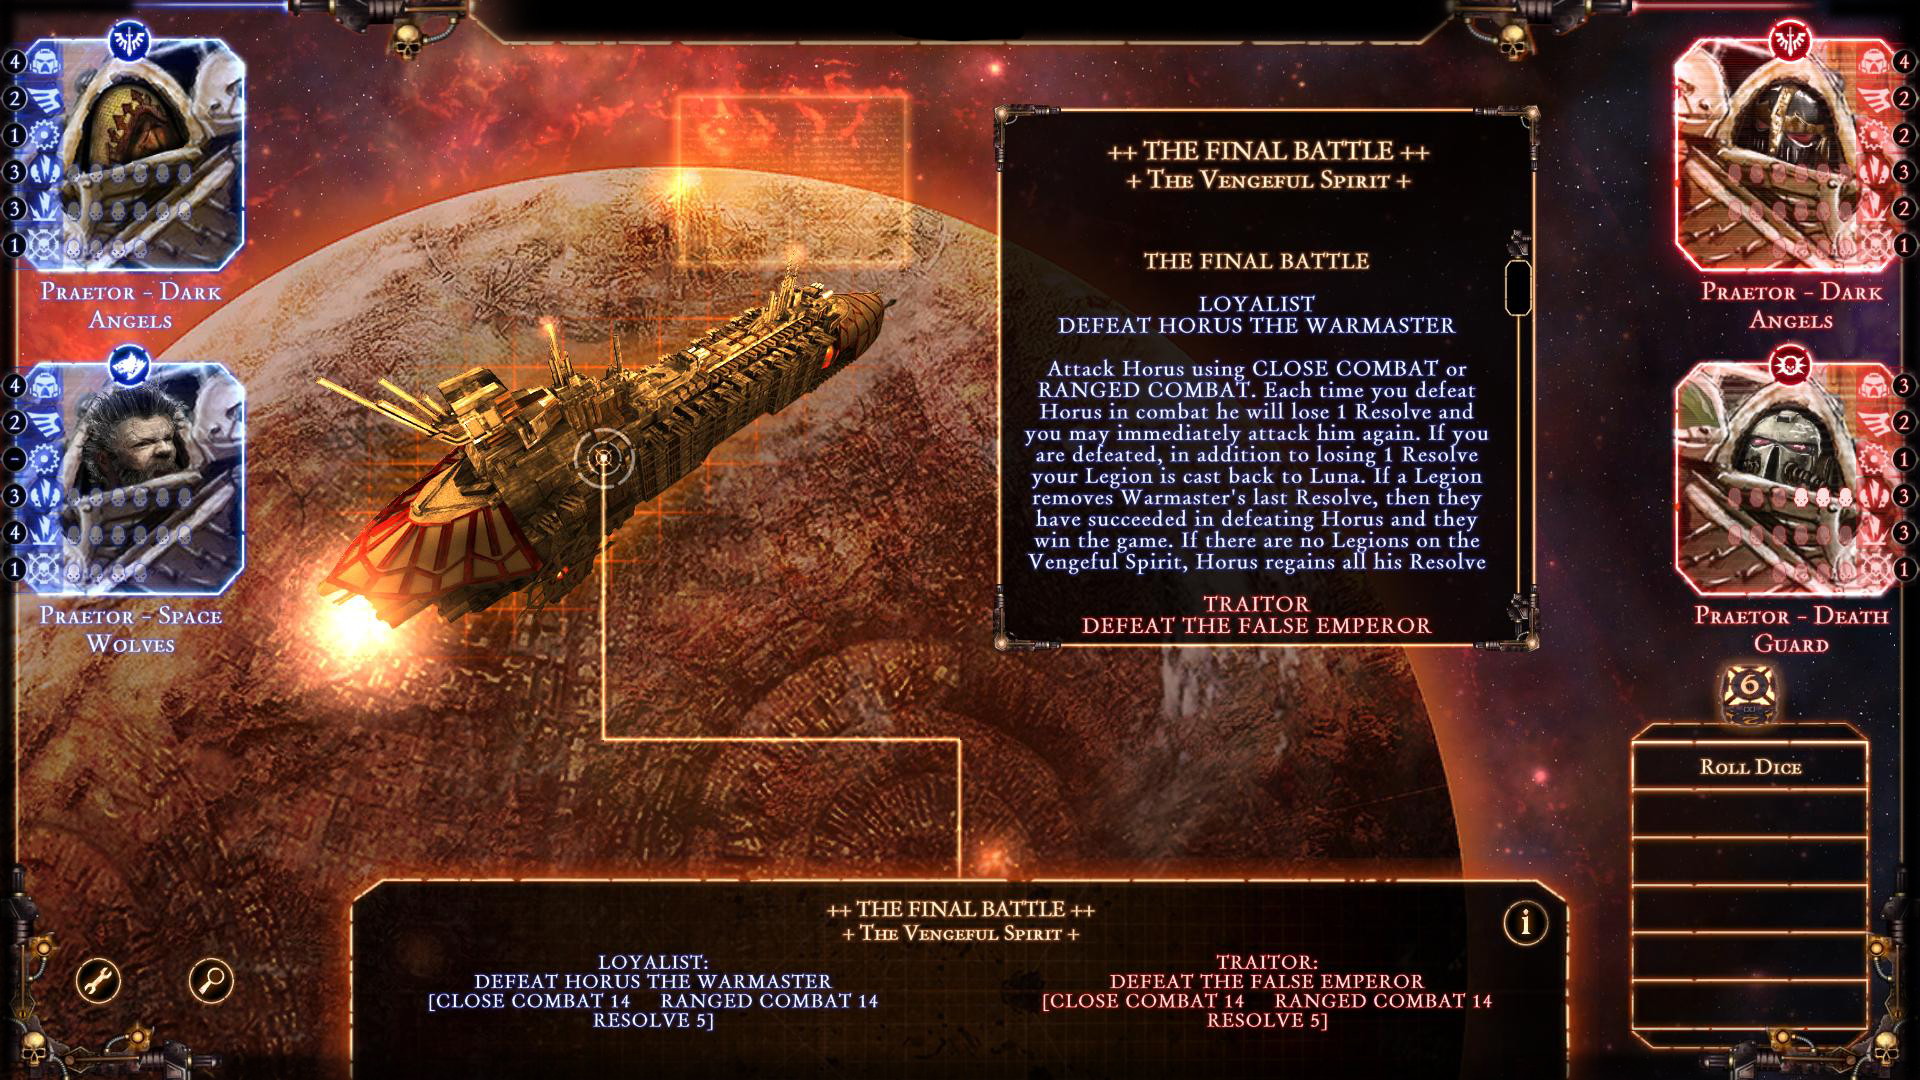 Talisman: The Horus Heresy - screenshot 3